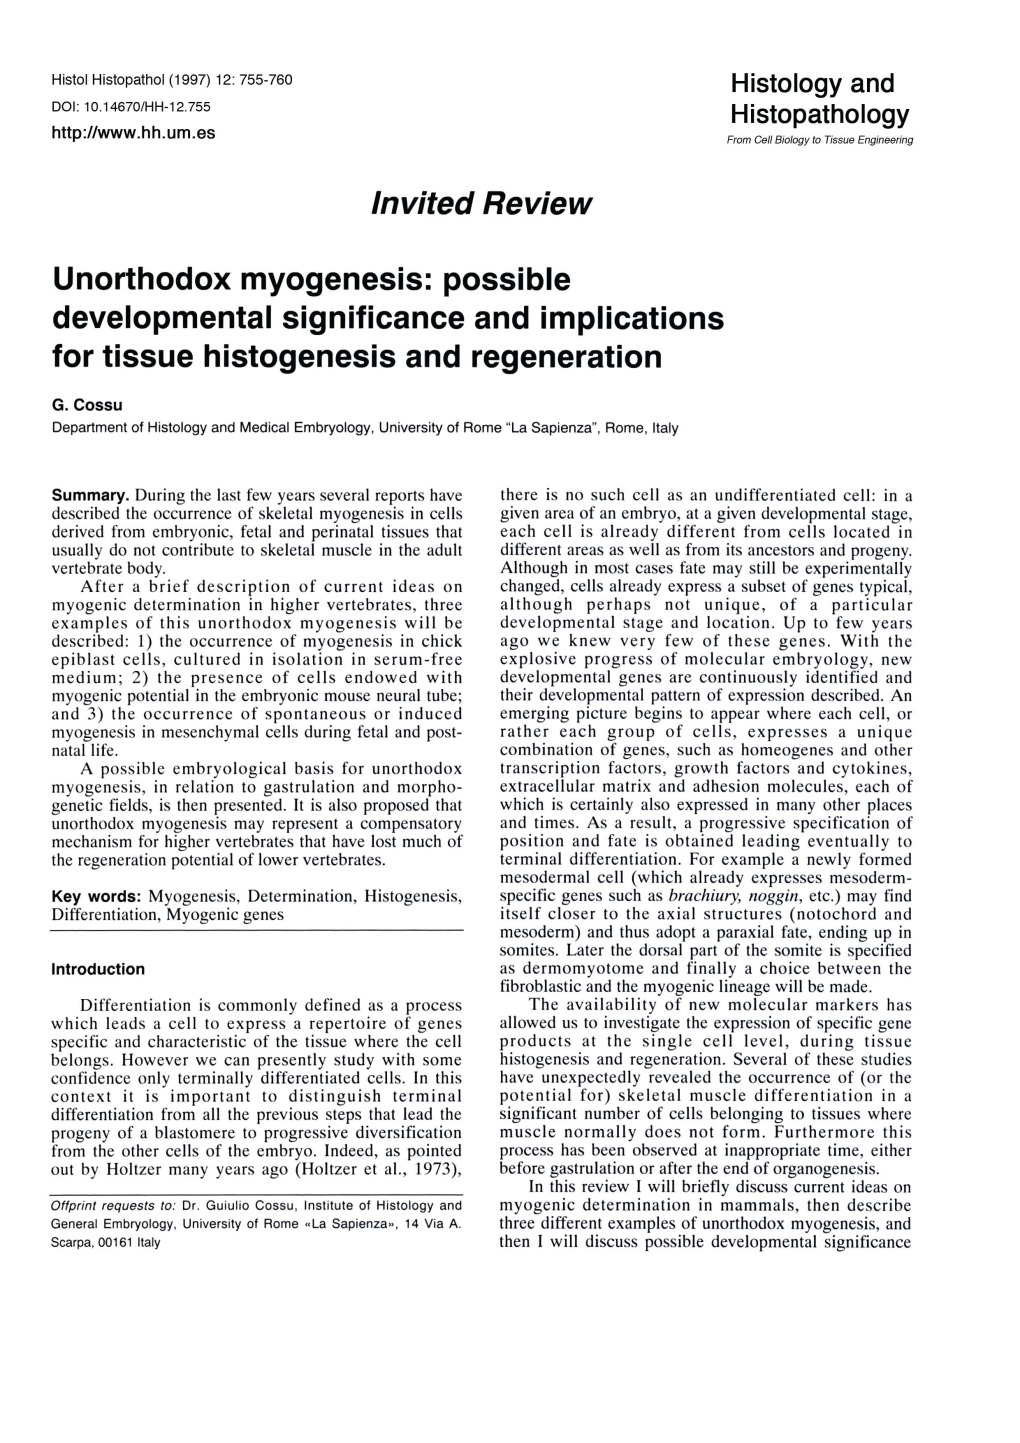 Invited Review Unorthodox Myogenesis